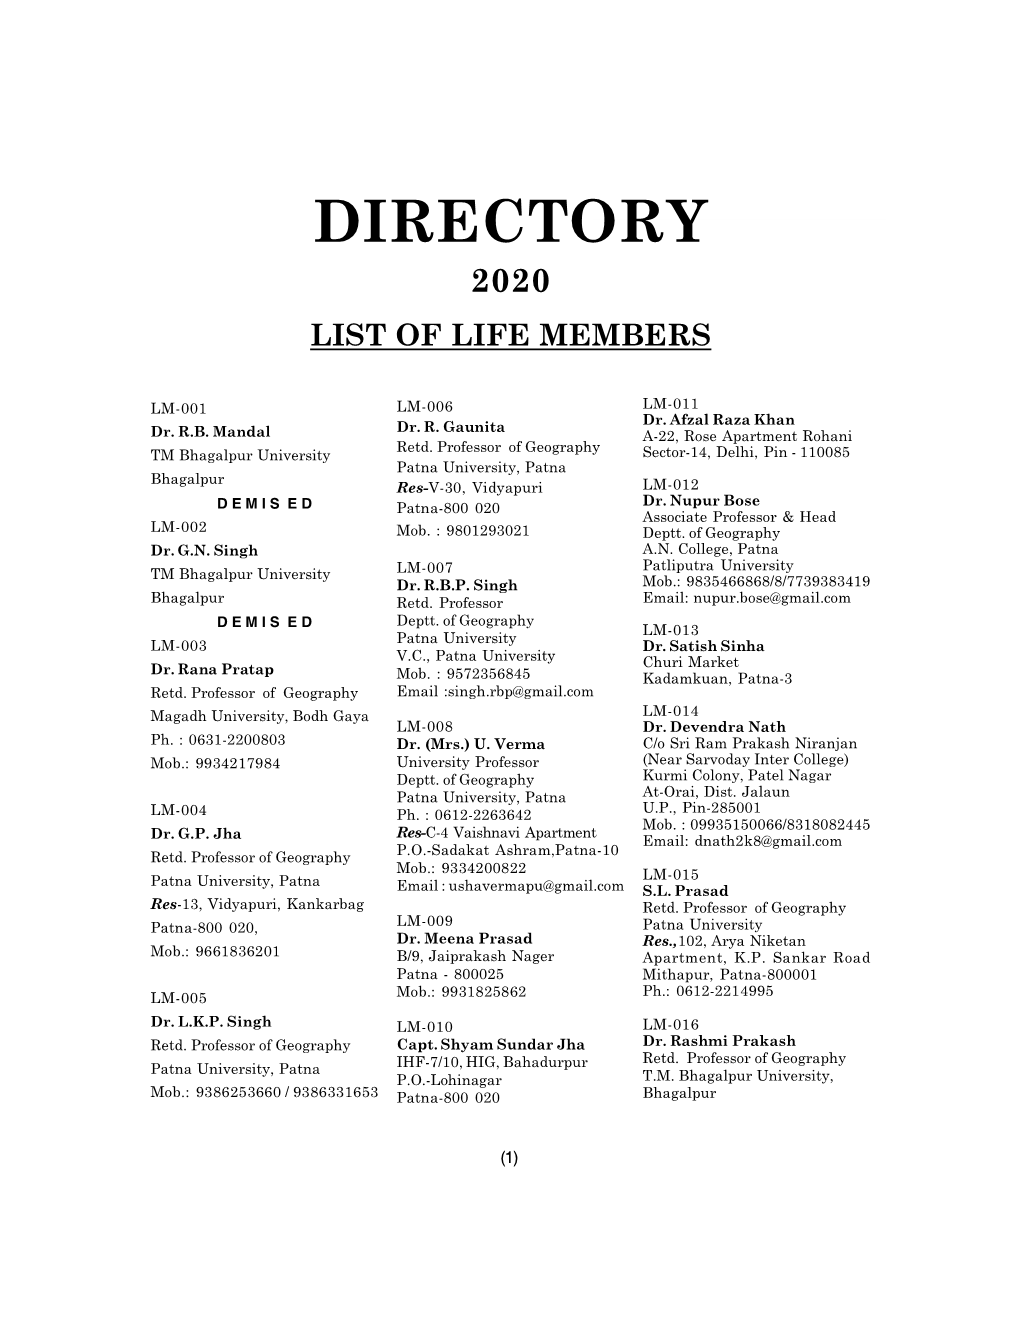 Directorylist of Life Members 2020 List of Life Members